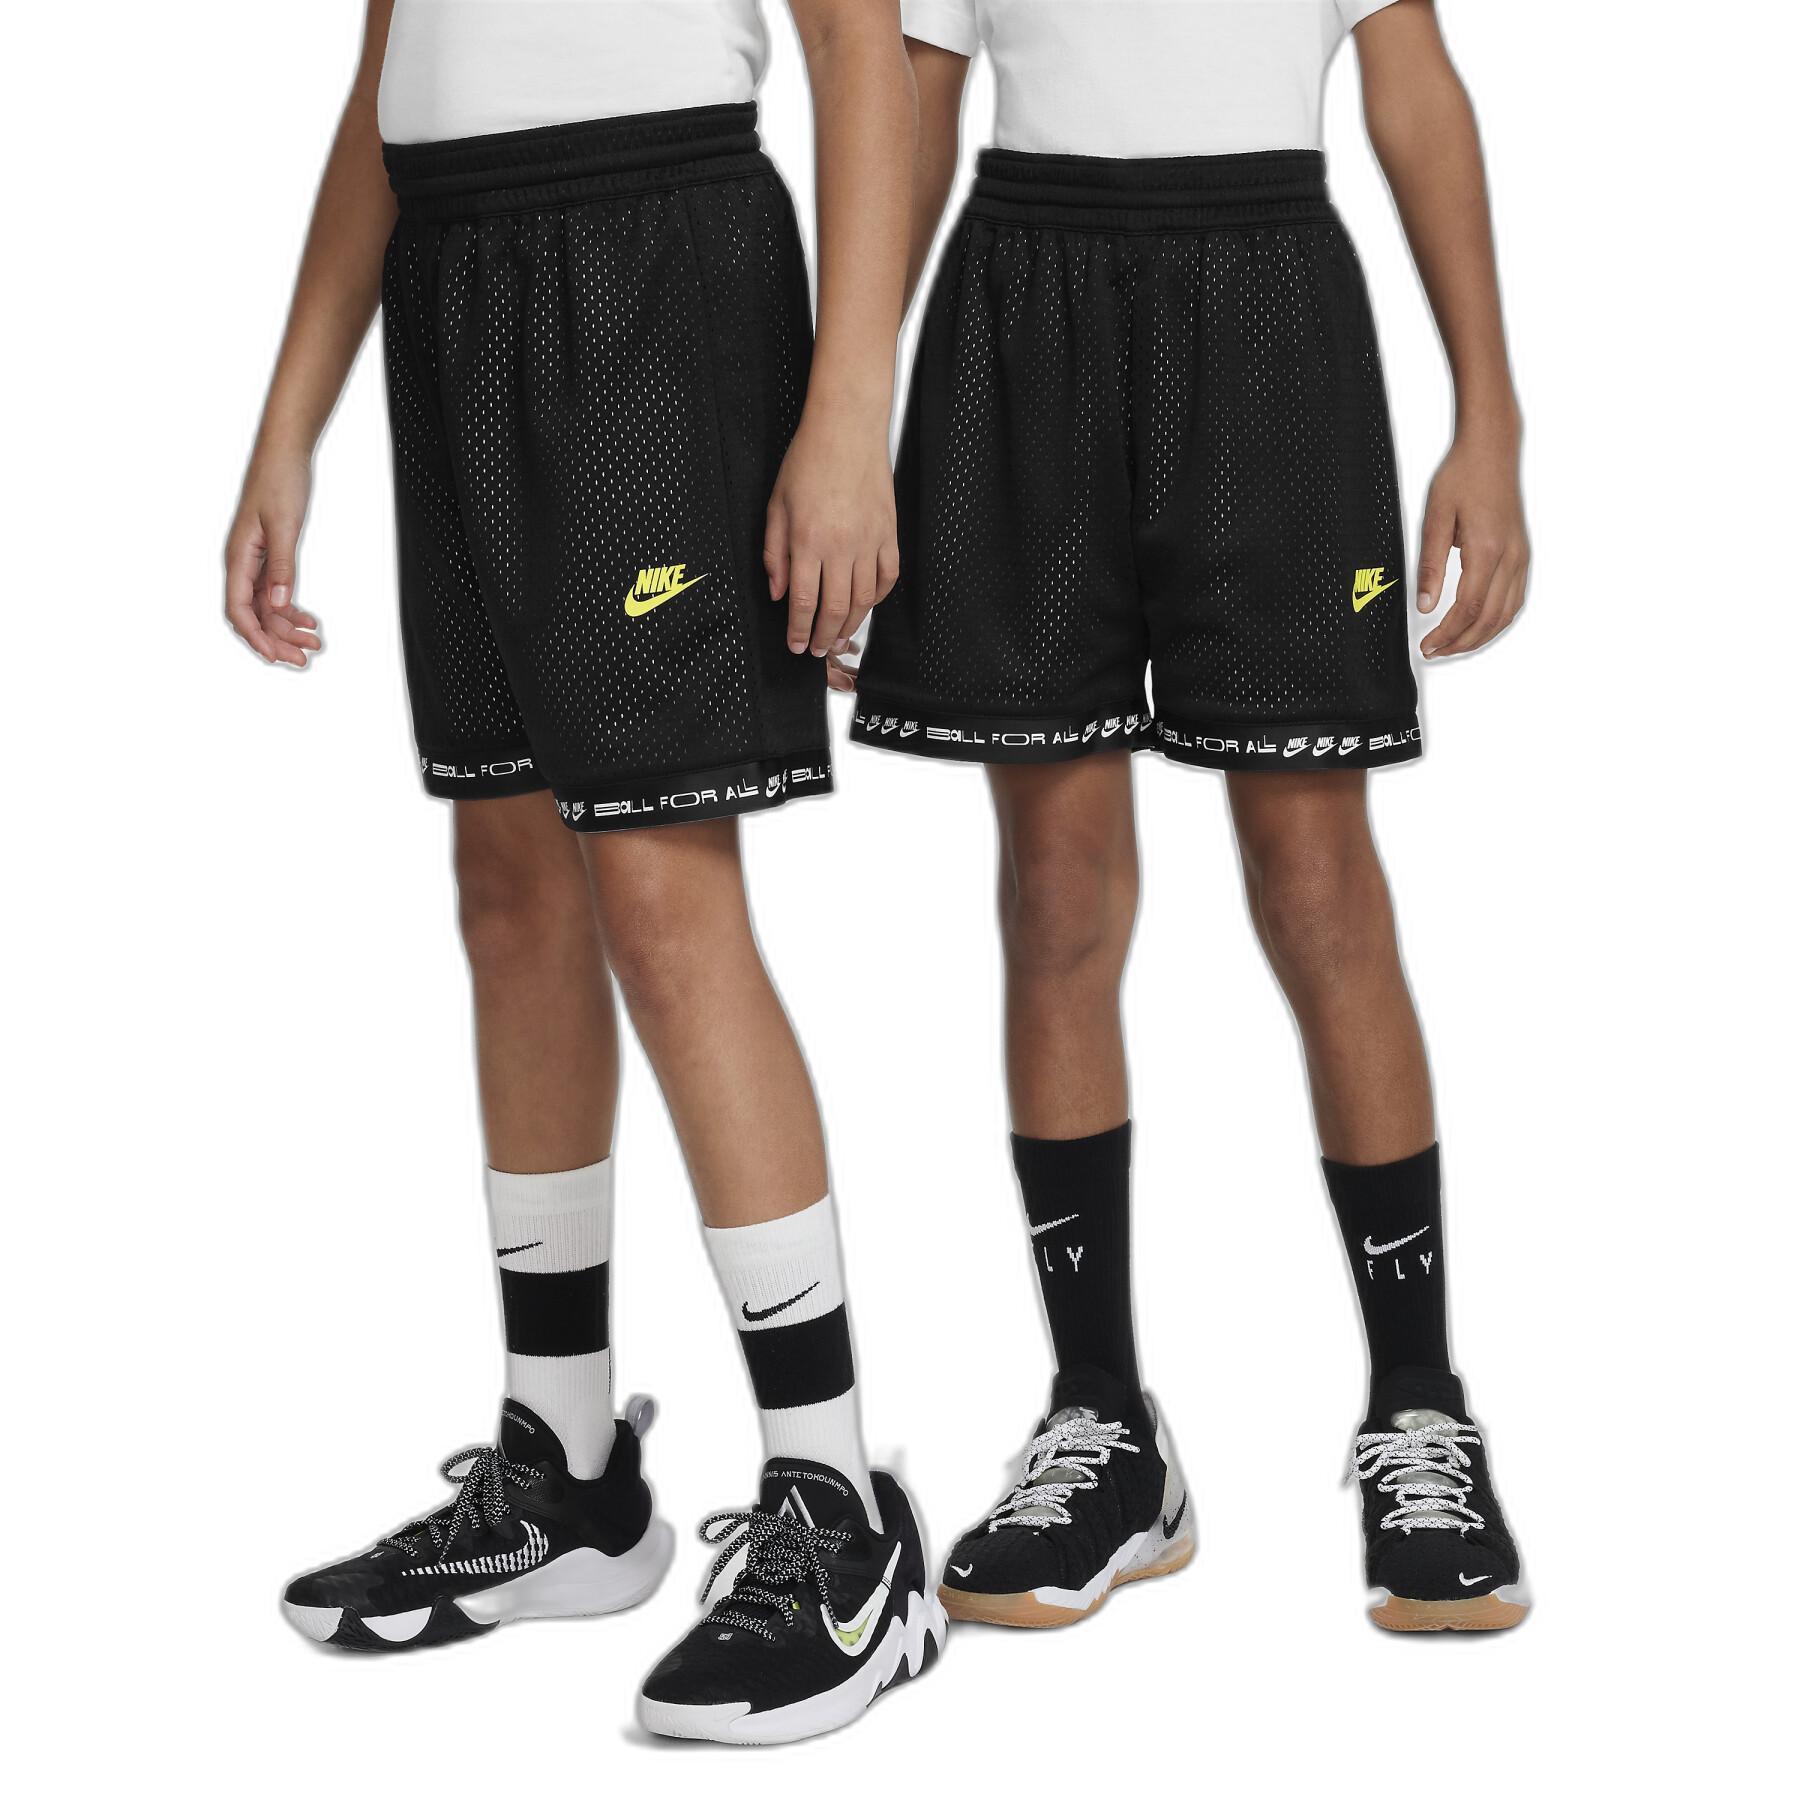 Short reversible para niños Nike C.O.B.